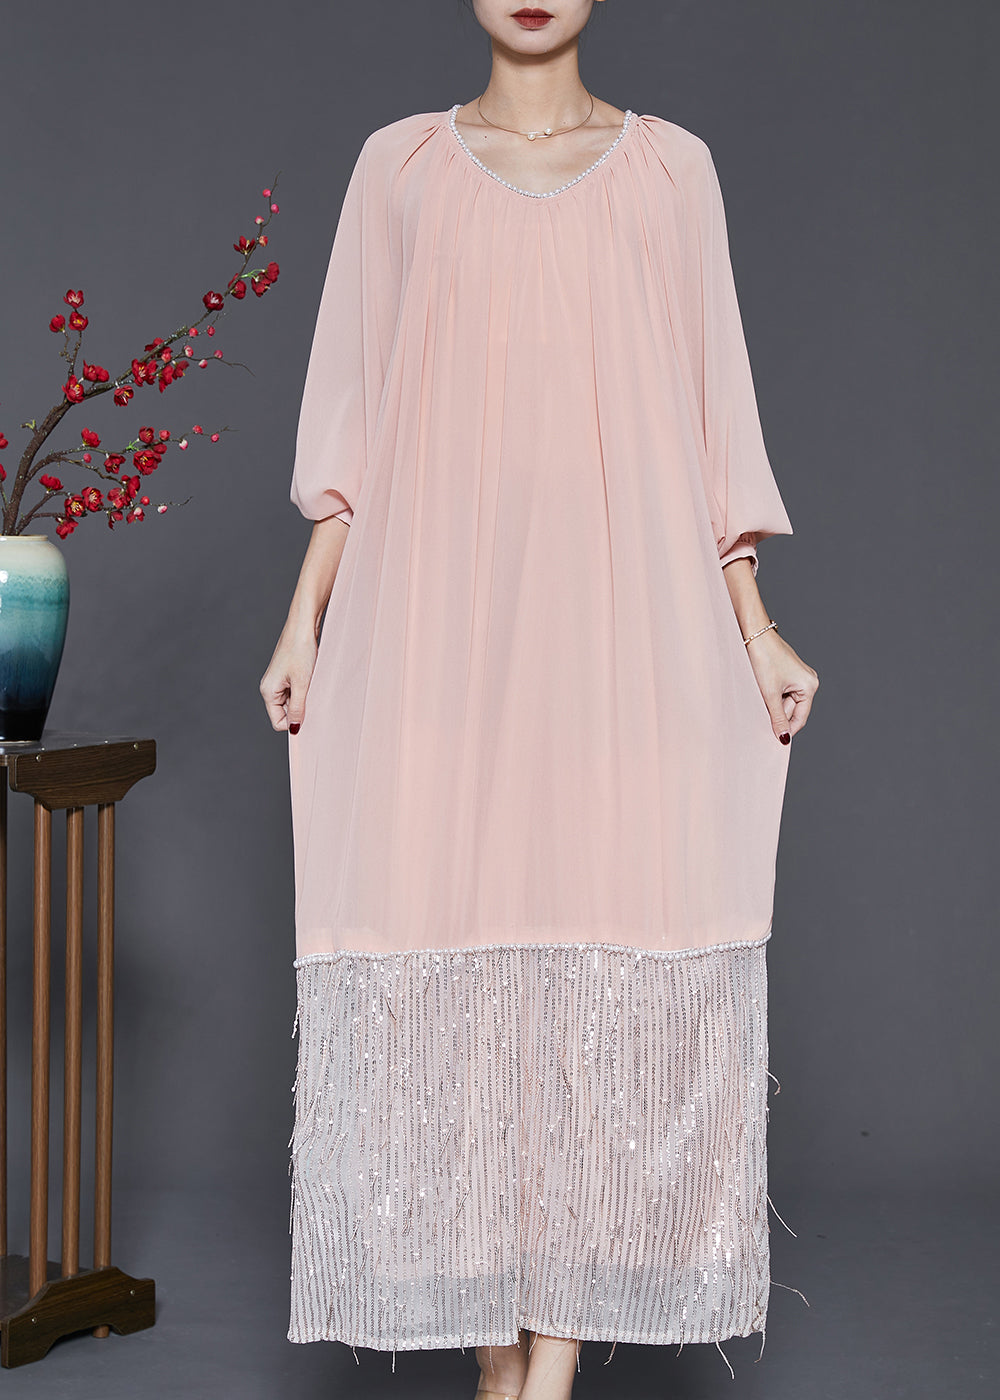 Art Pink Tasseled Patchwork Chiffon Ankle Dress Spring